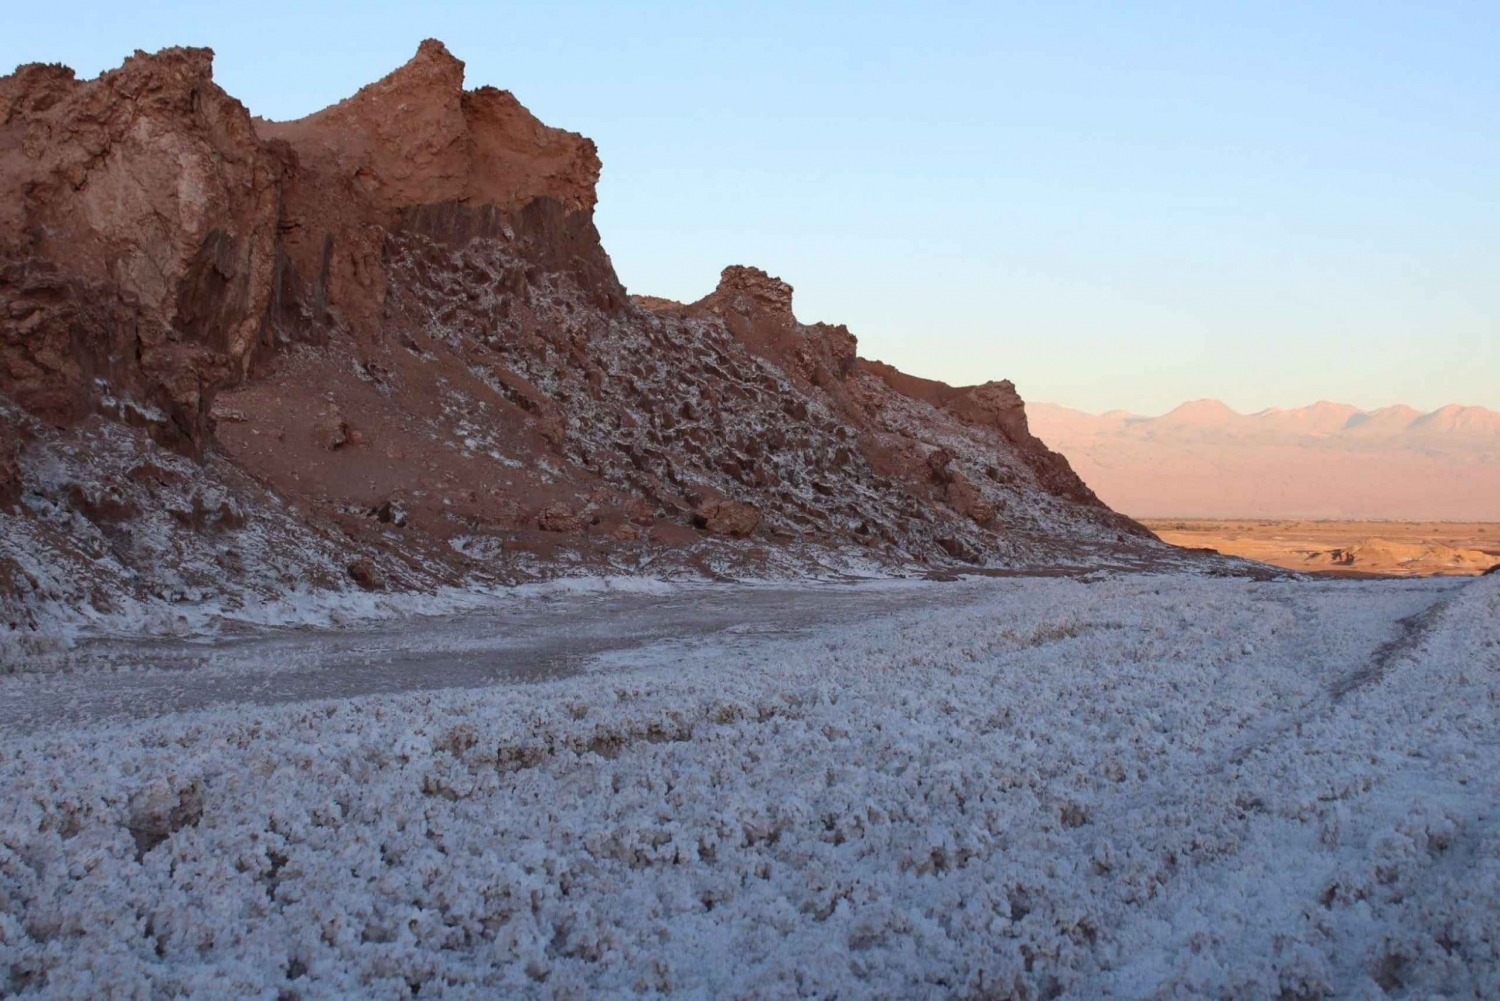 San Pedro de Atacama: Guided Trip to the Salt Mountain Range